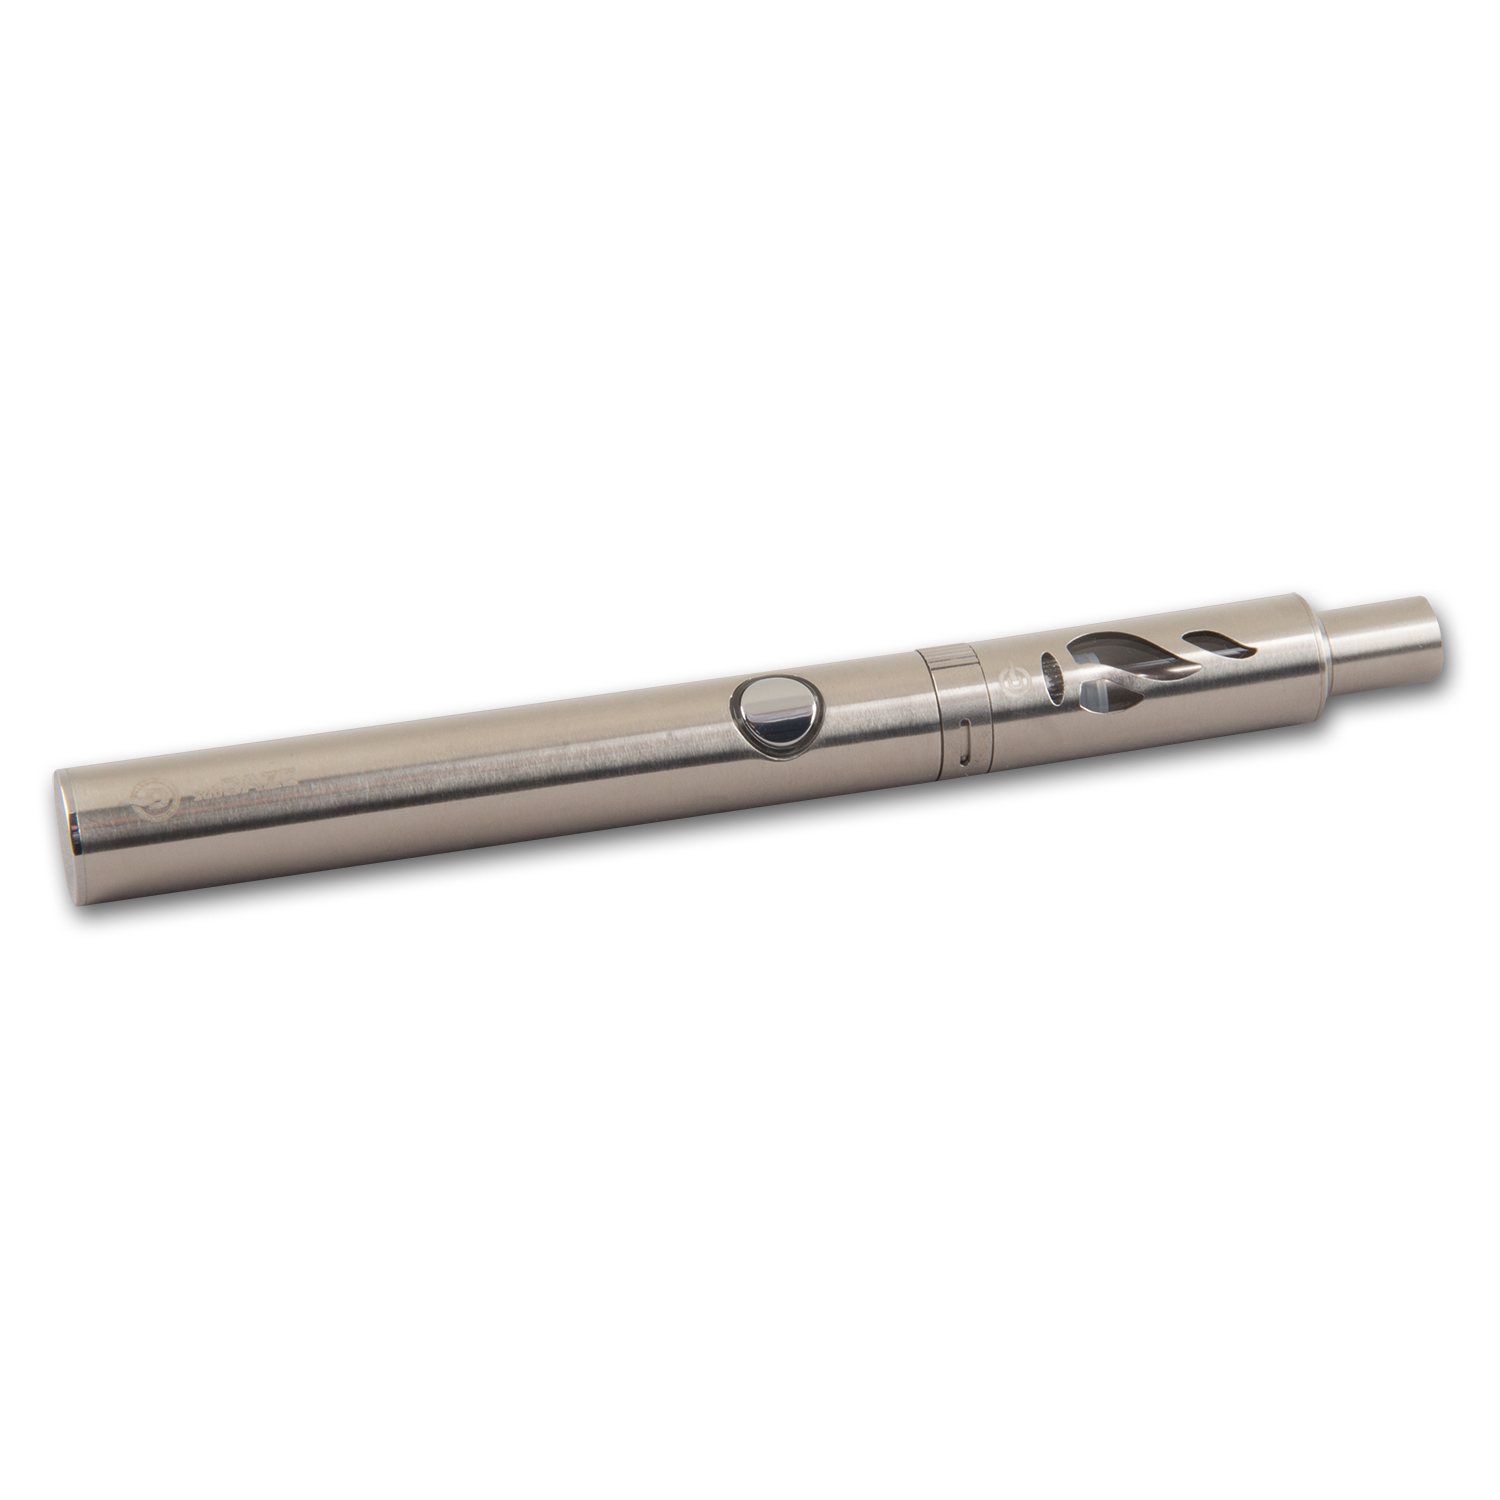 E-Zigarette DAMPFANSTALT subBaze silber bis 30 W 900 mAh 0,5 Ohm